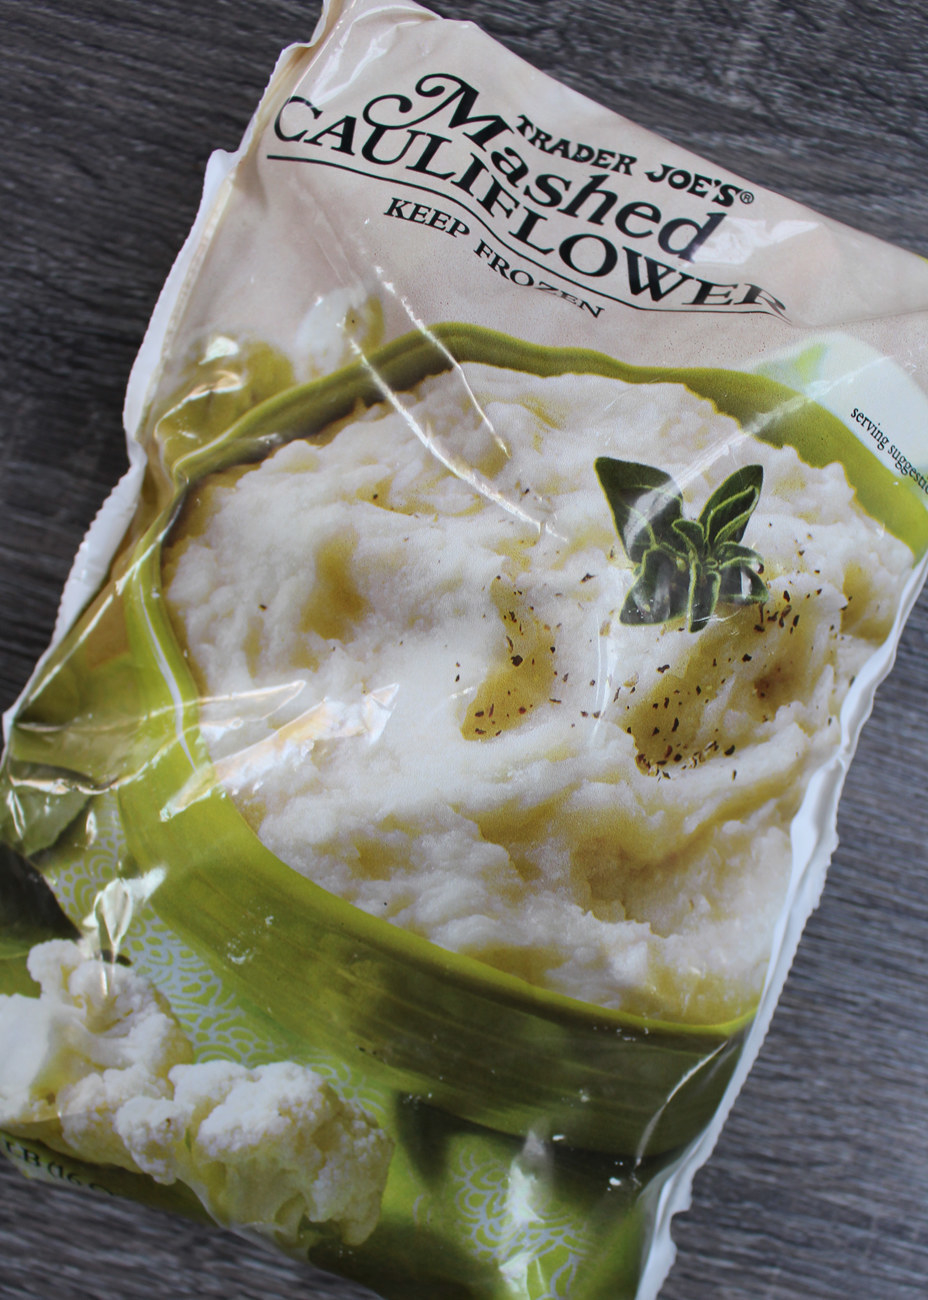 A bag of frozen mashed cauliflower.